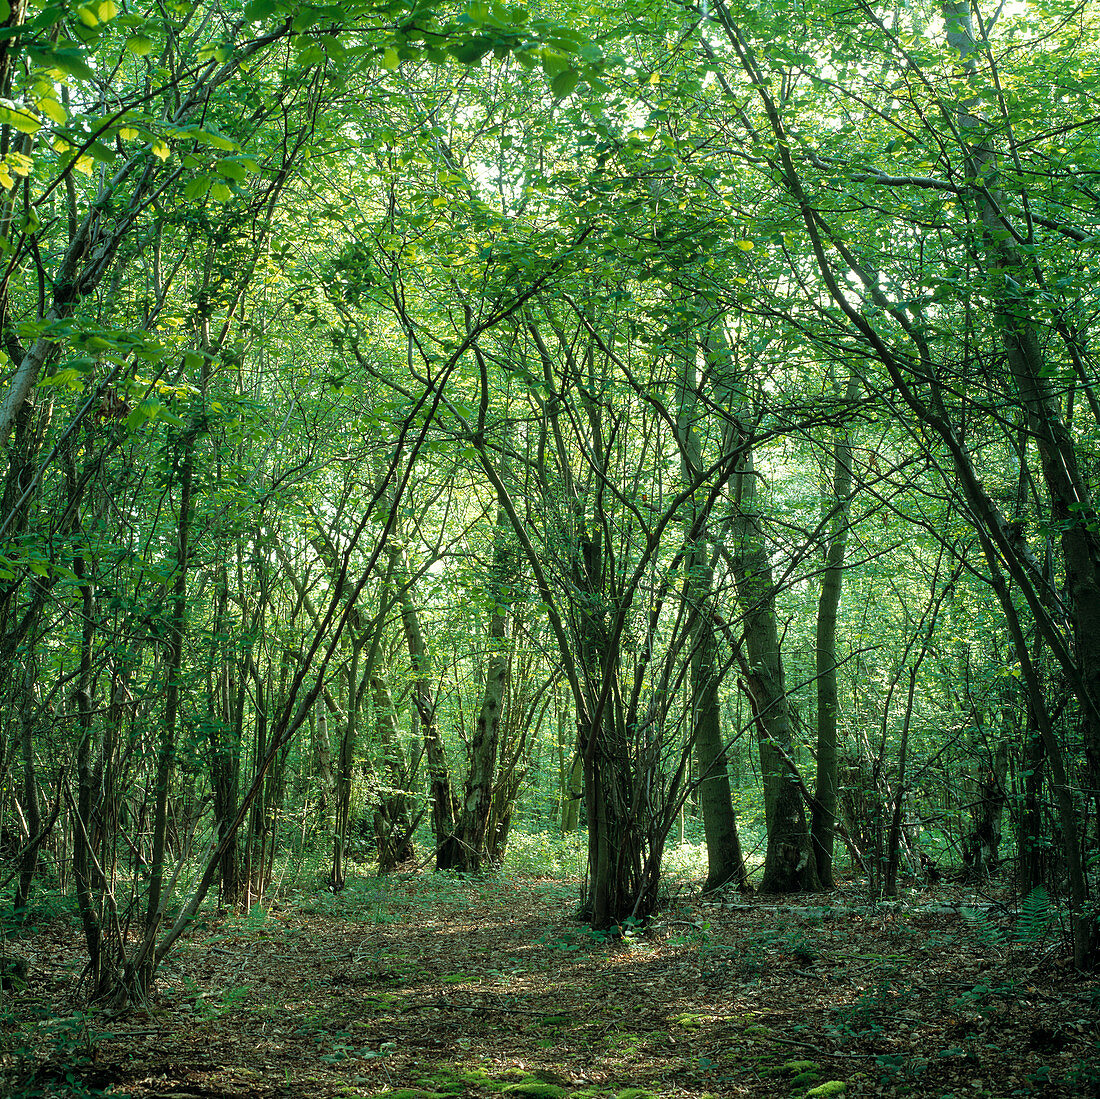 Coppice woodland with hazel trees